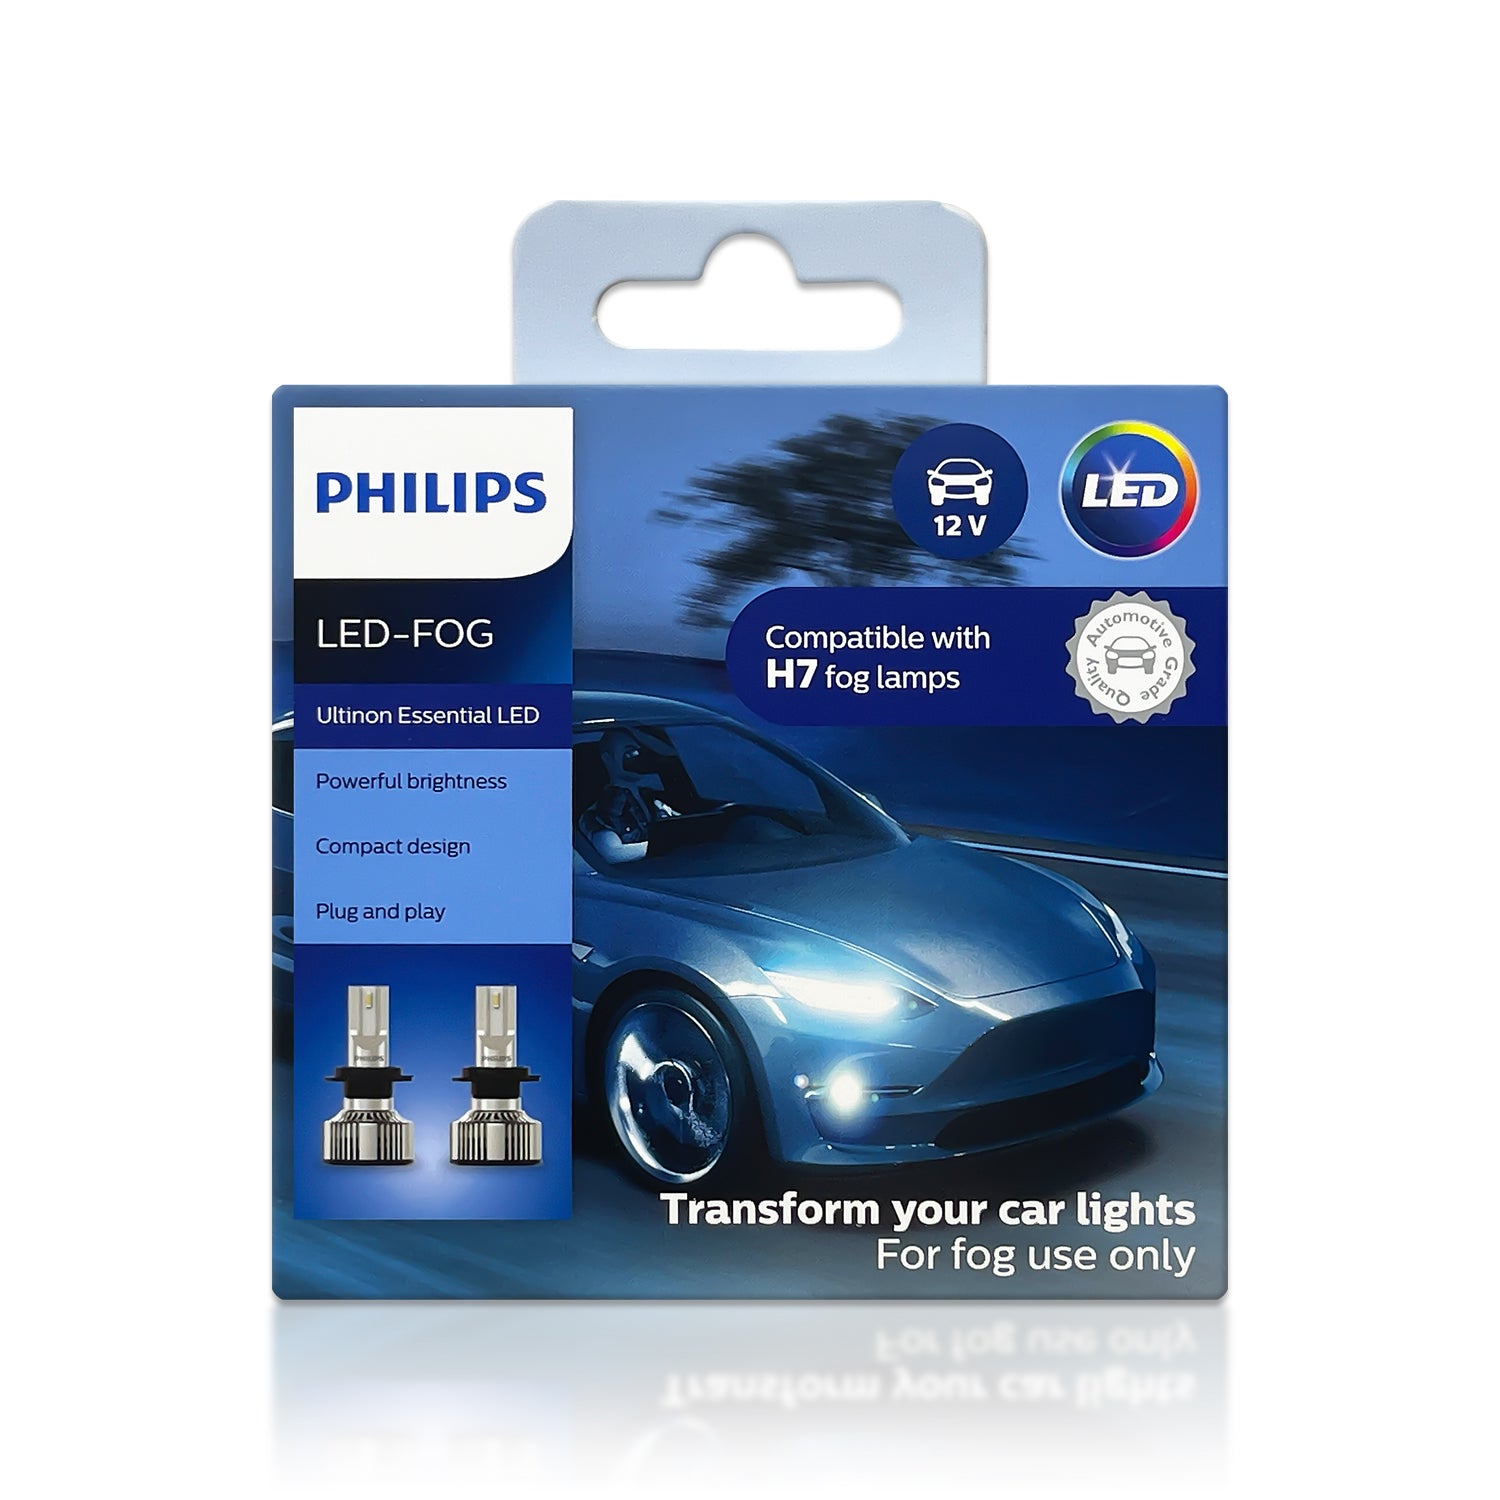 2 - New OEM Philips H7- 55W Halogen Auto Headlight Bulbs, Fog Lights, #  12972